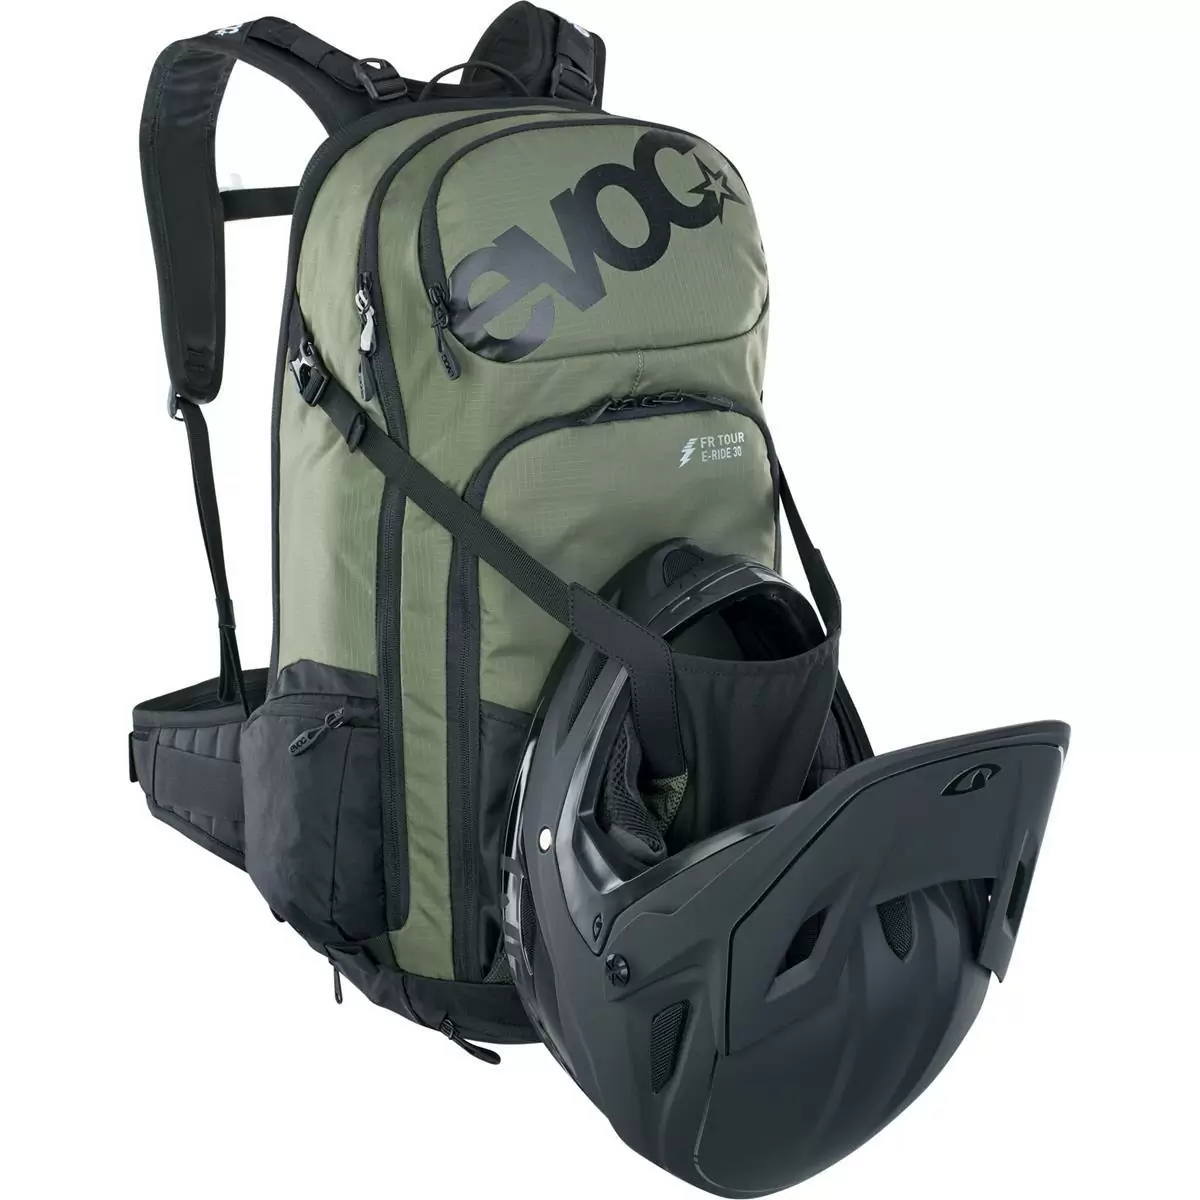 FR Tour E-Ride e-bike battery backpack with back protector size M/L 30 liters Dark Olive - Black #4